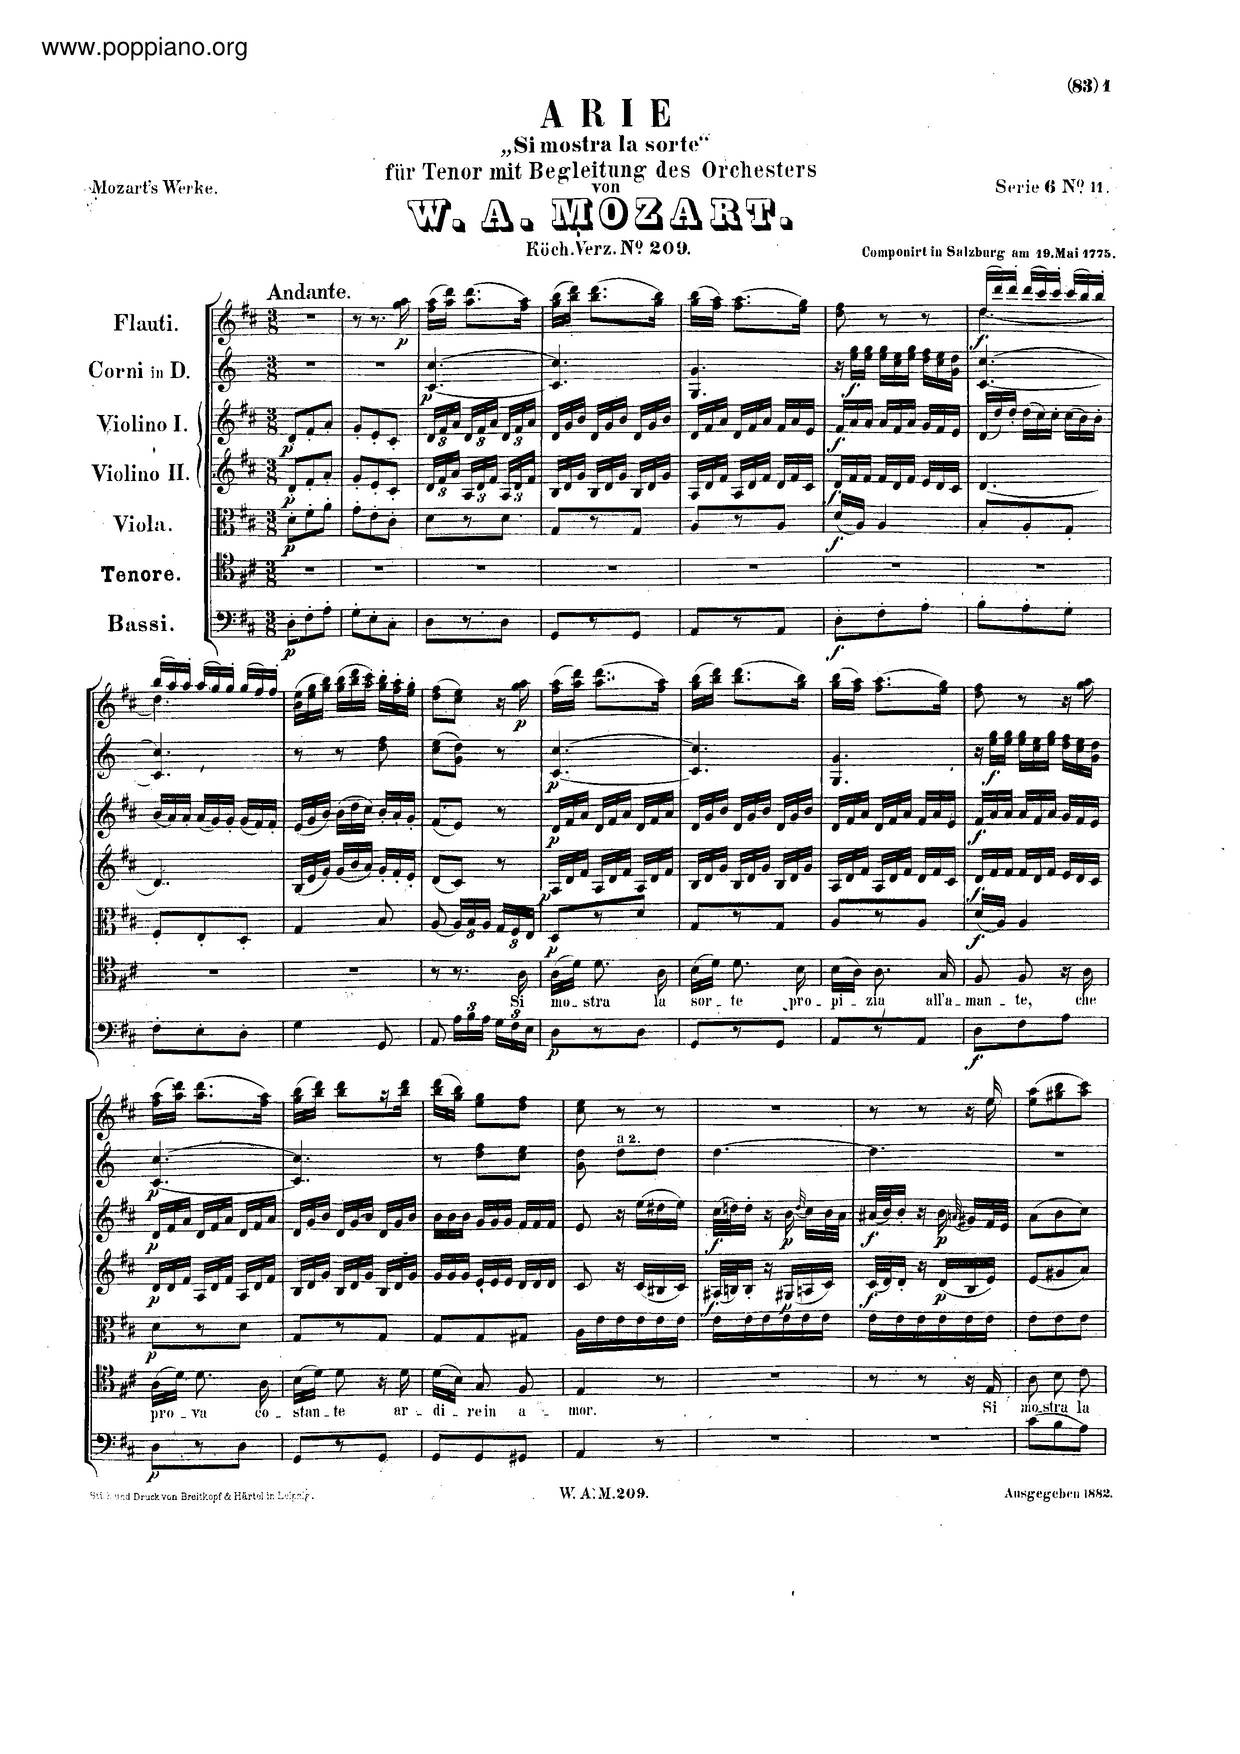 Si Mostra La Sorte, K. 209琴譜